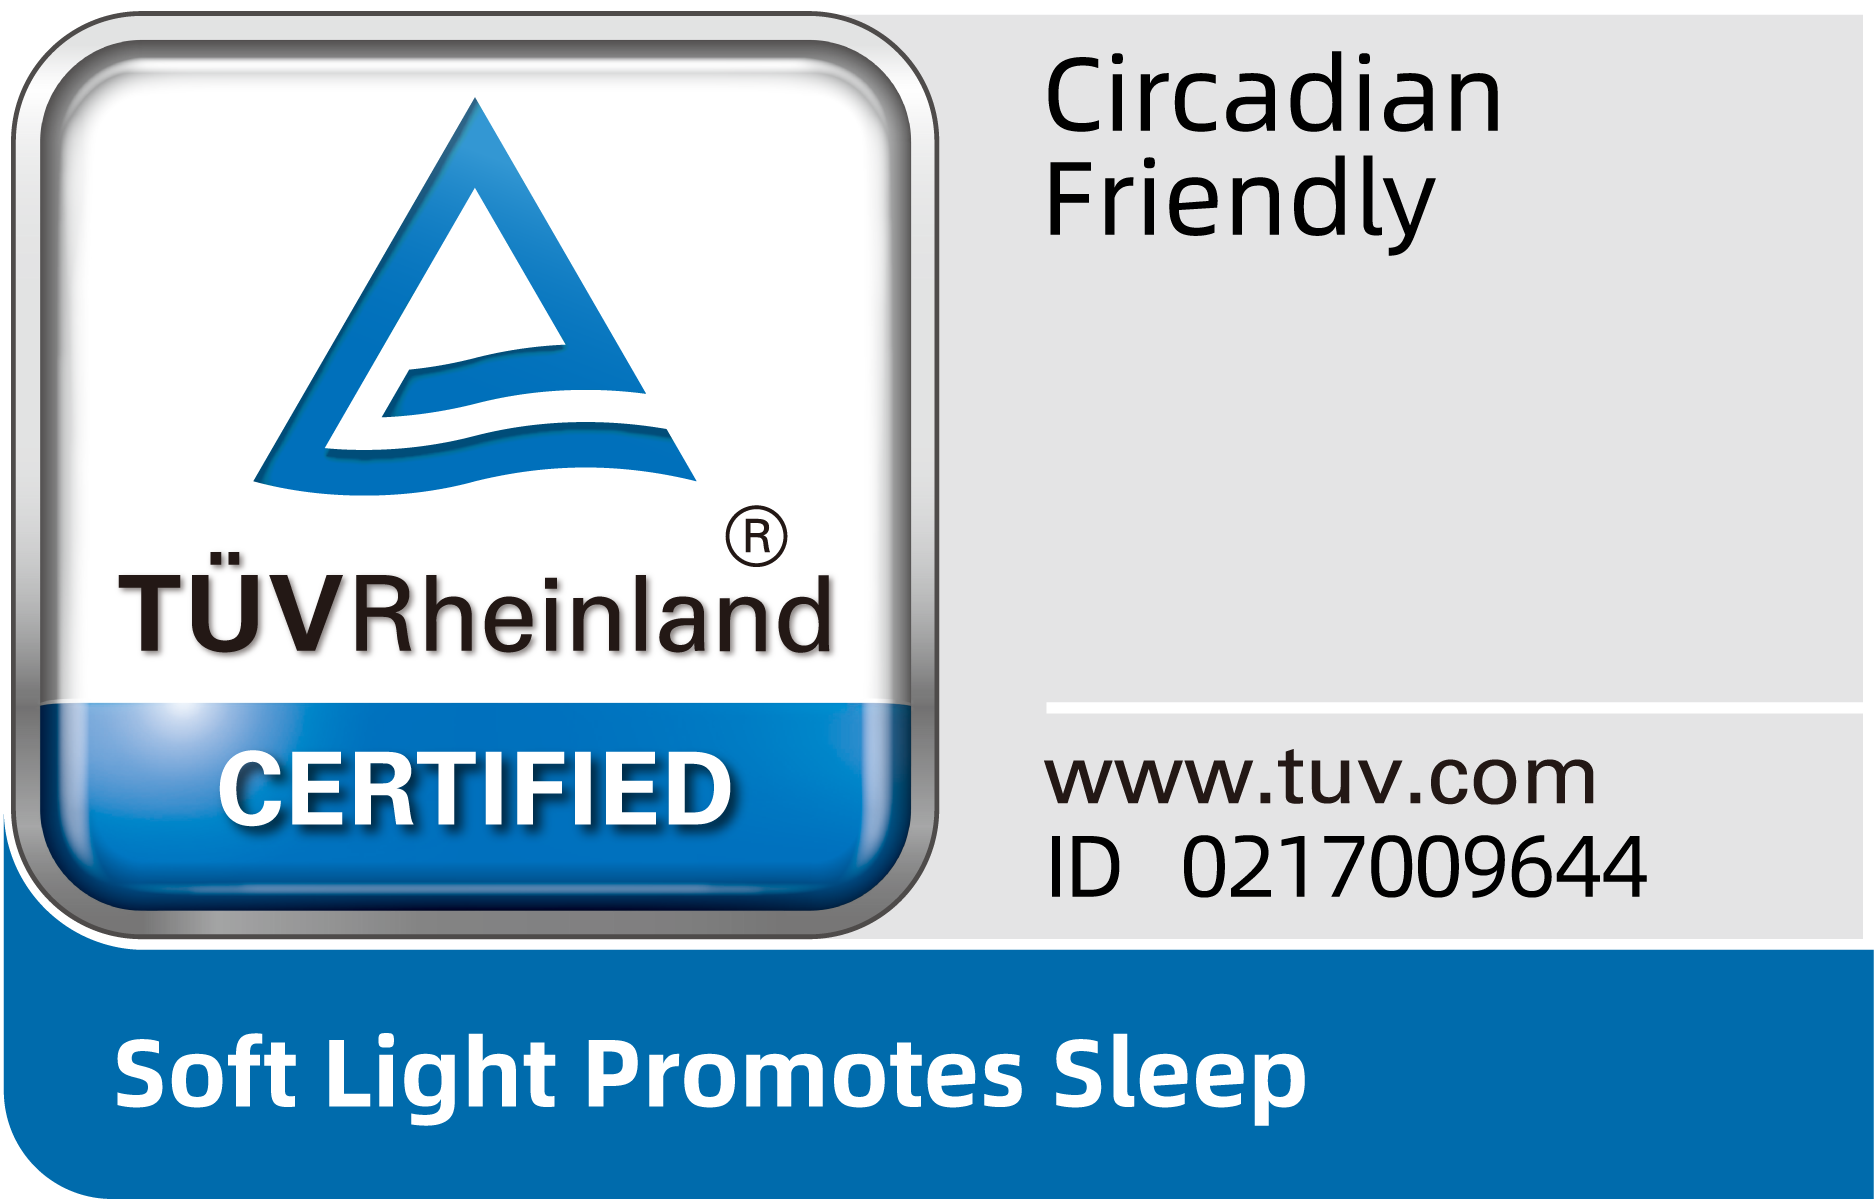 TÜV Rheinland Circadian Friendly Certification. 2